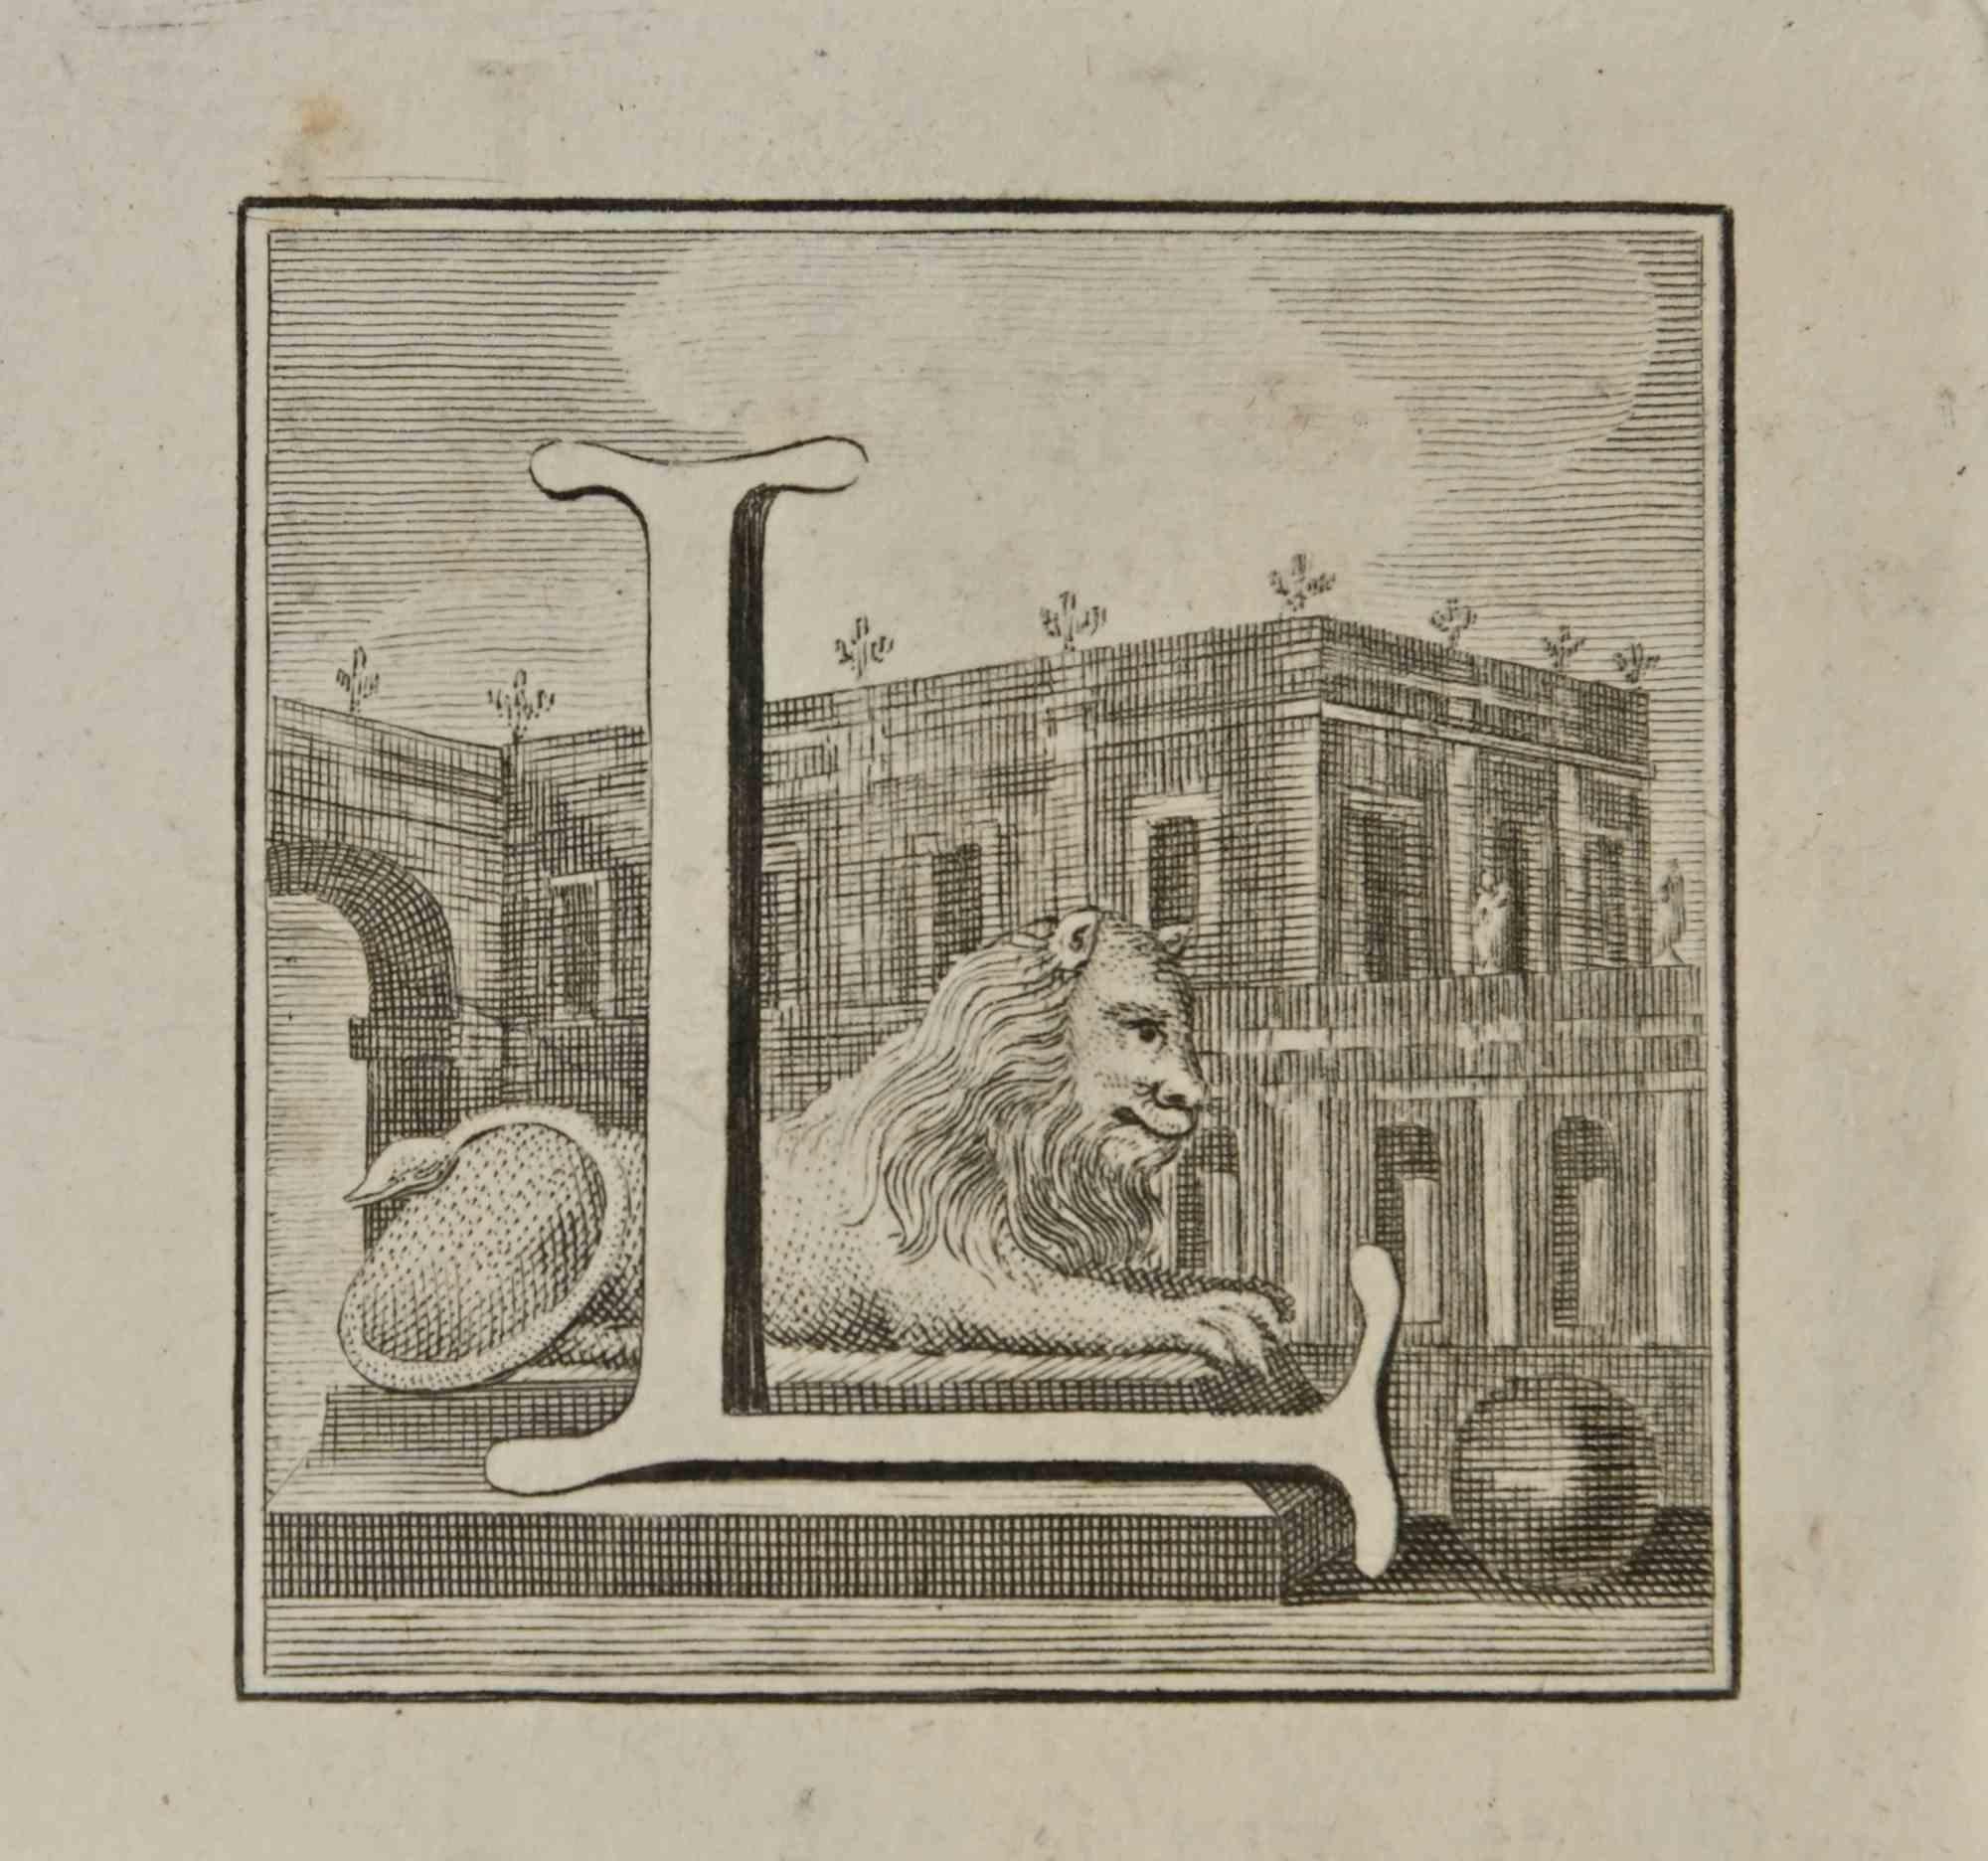 Letter of the Alphabet  L - Etching by Luigi Vanvitelli - 18th Century